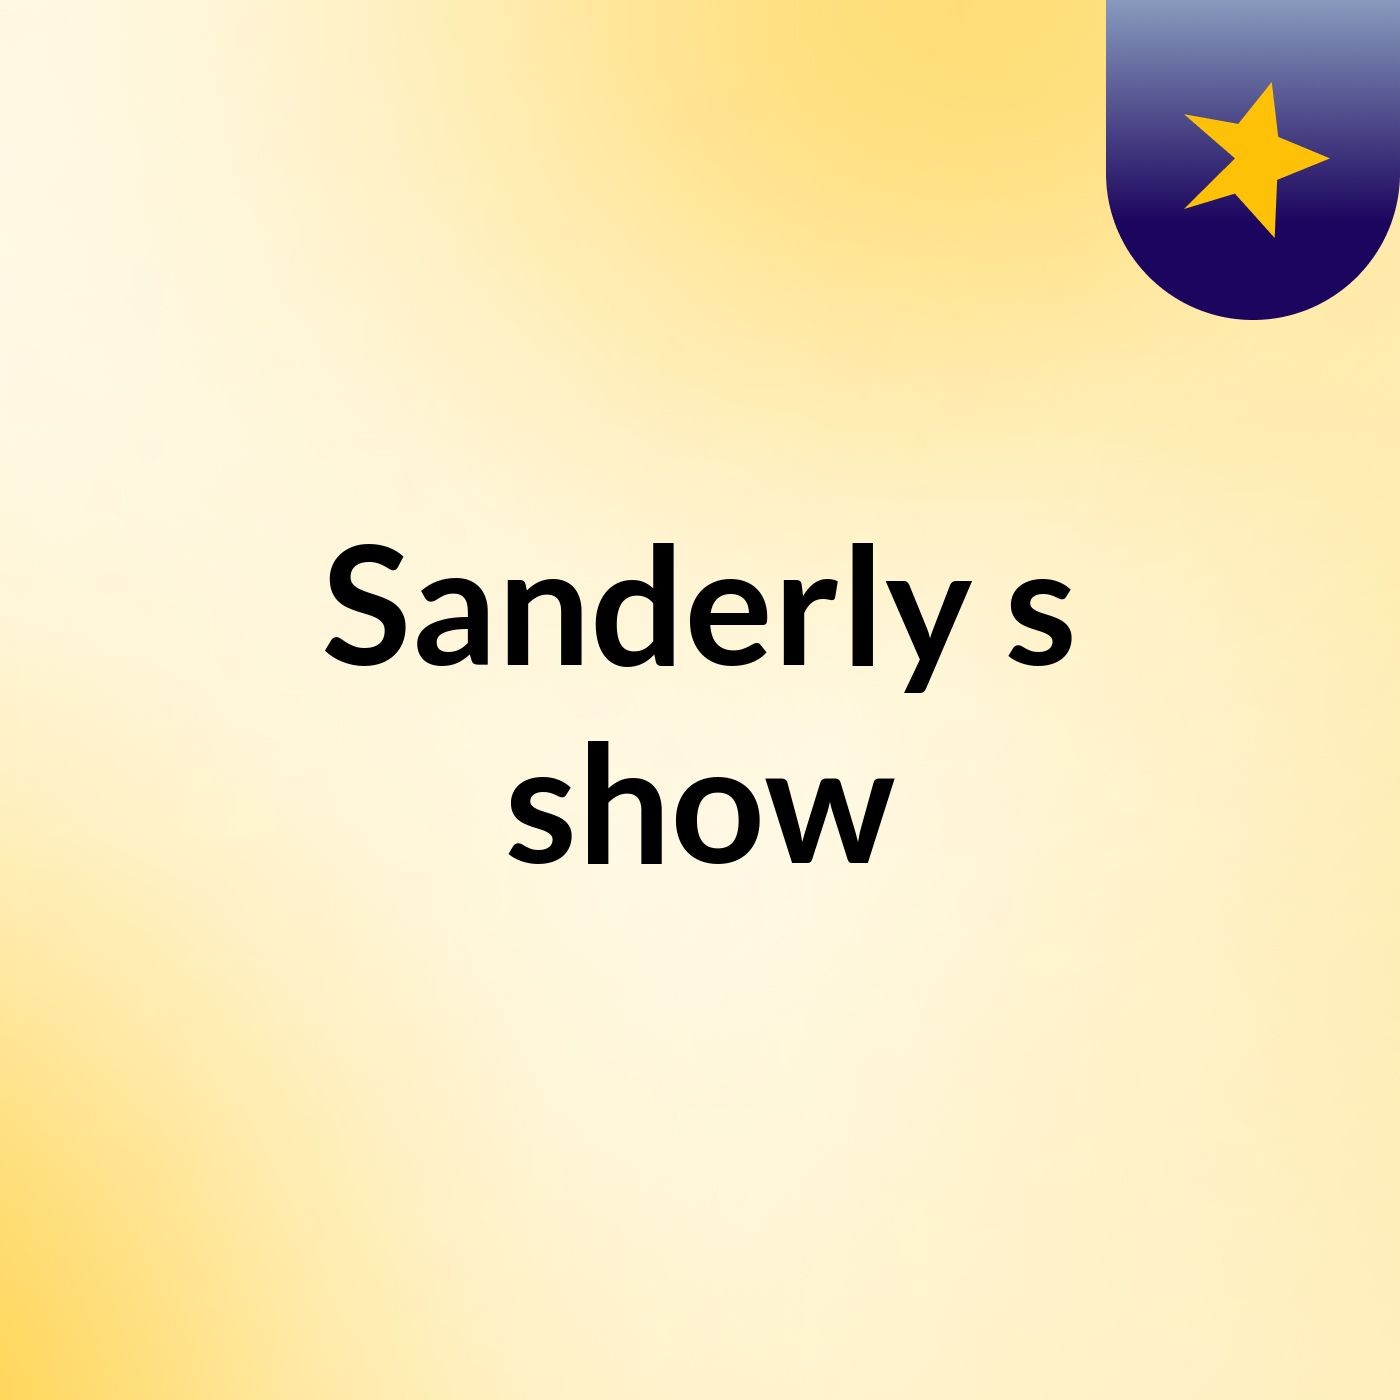 Sanderly's show